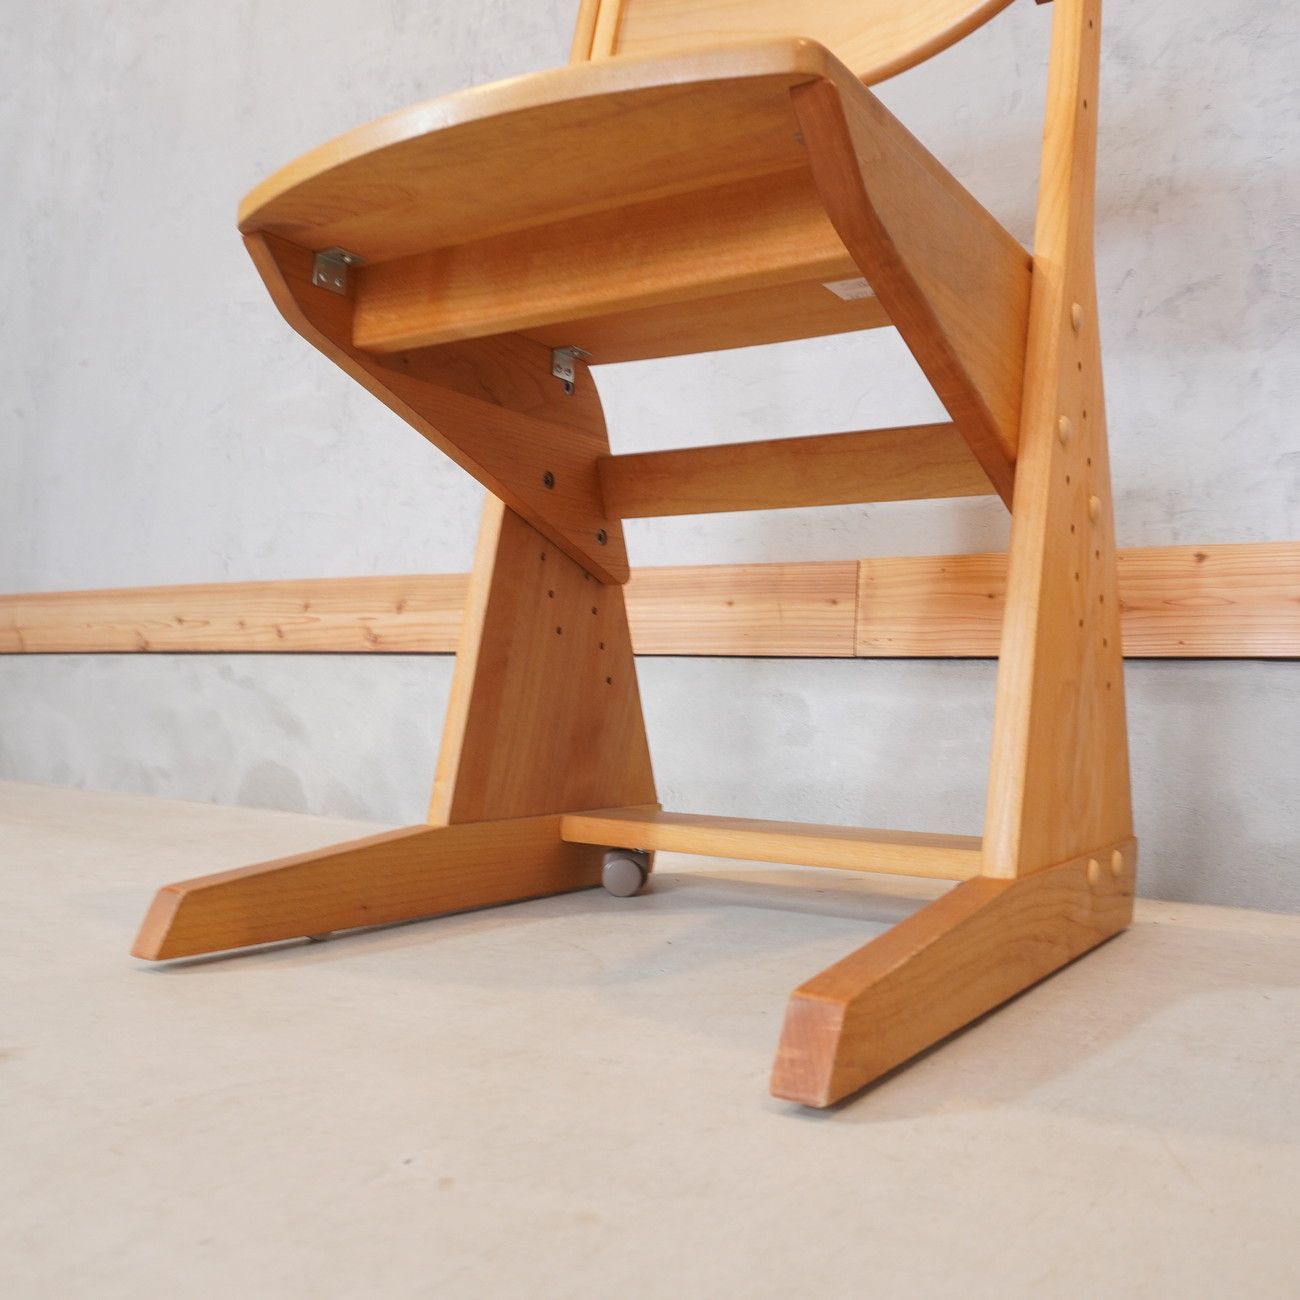 HOTTA WOODY 堀田木工所 デスクチェア アルダー材 学習椅子 高さ調整可